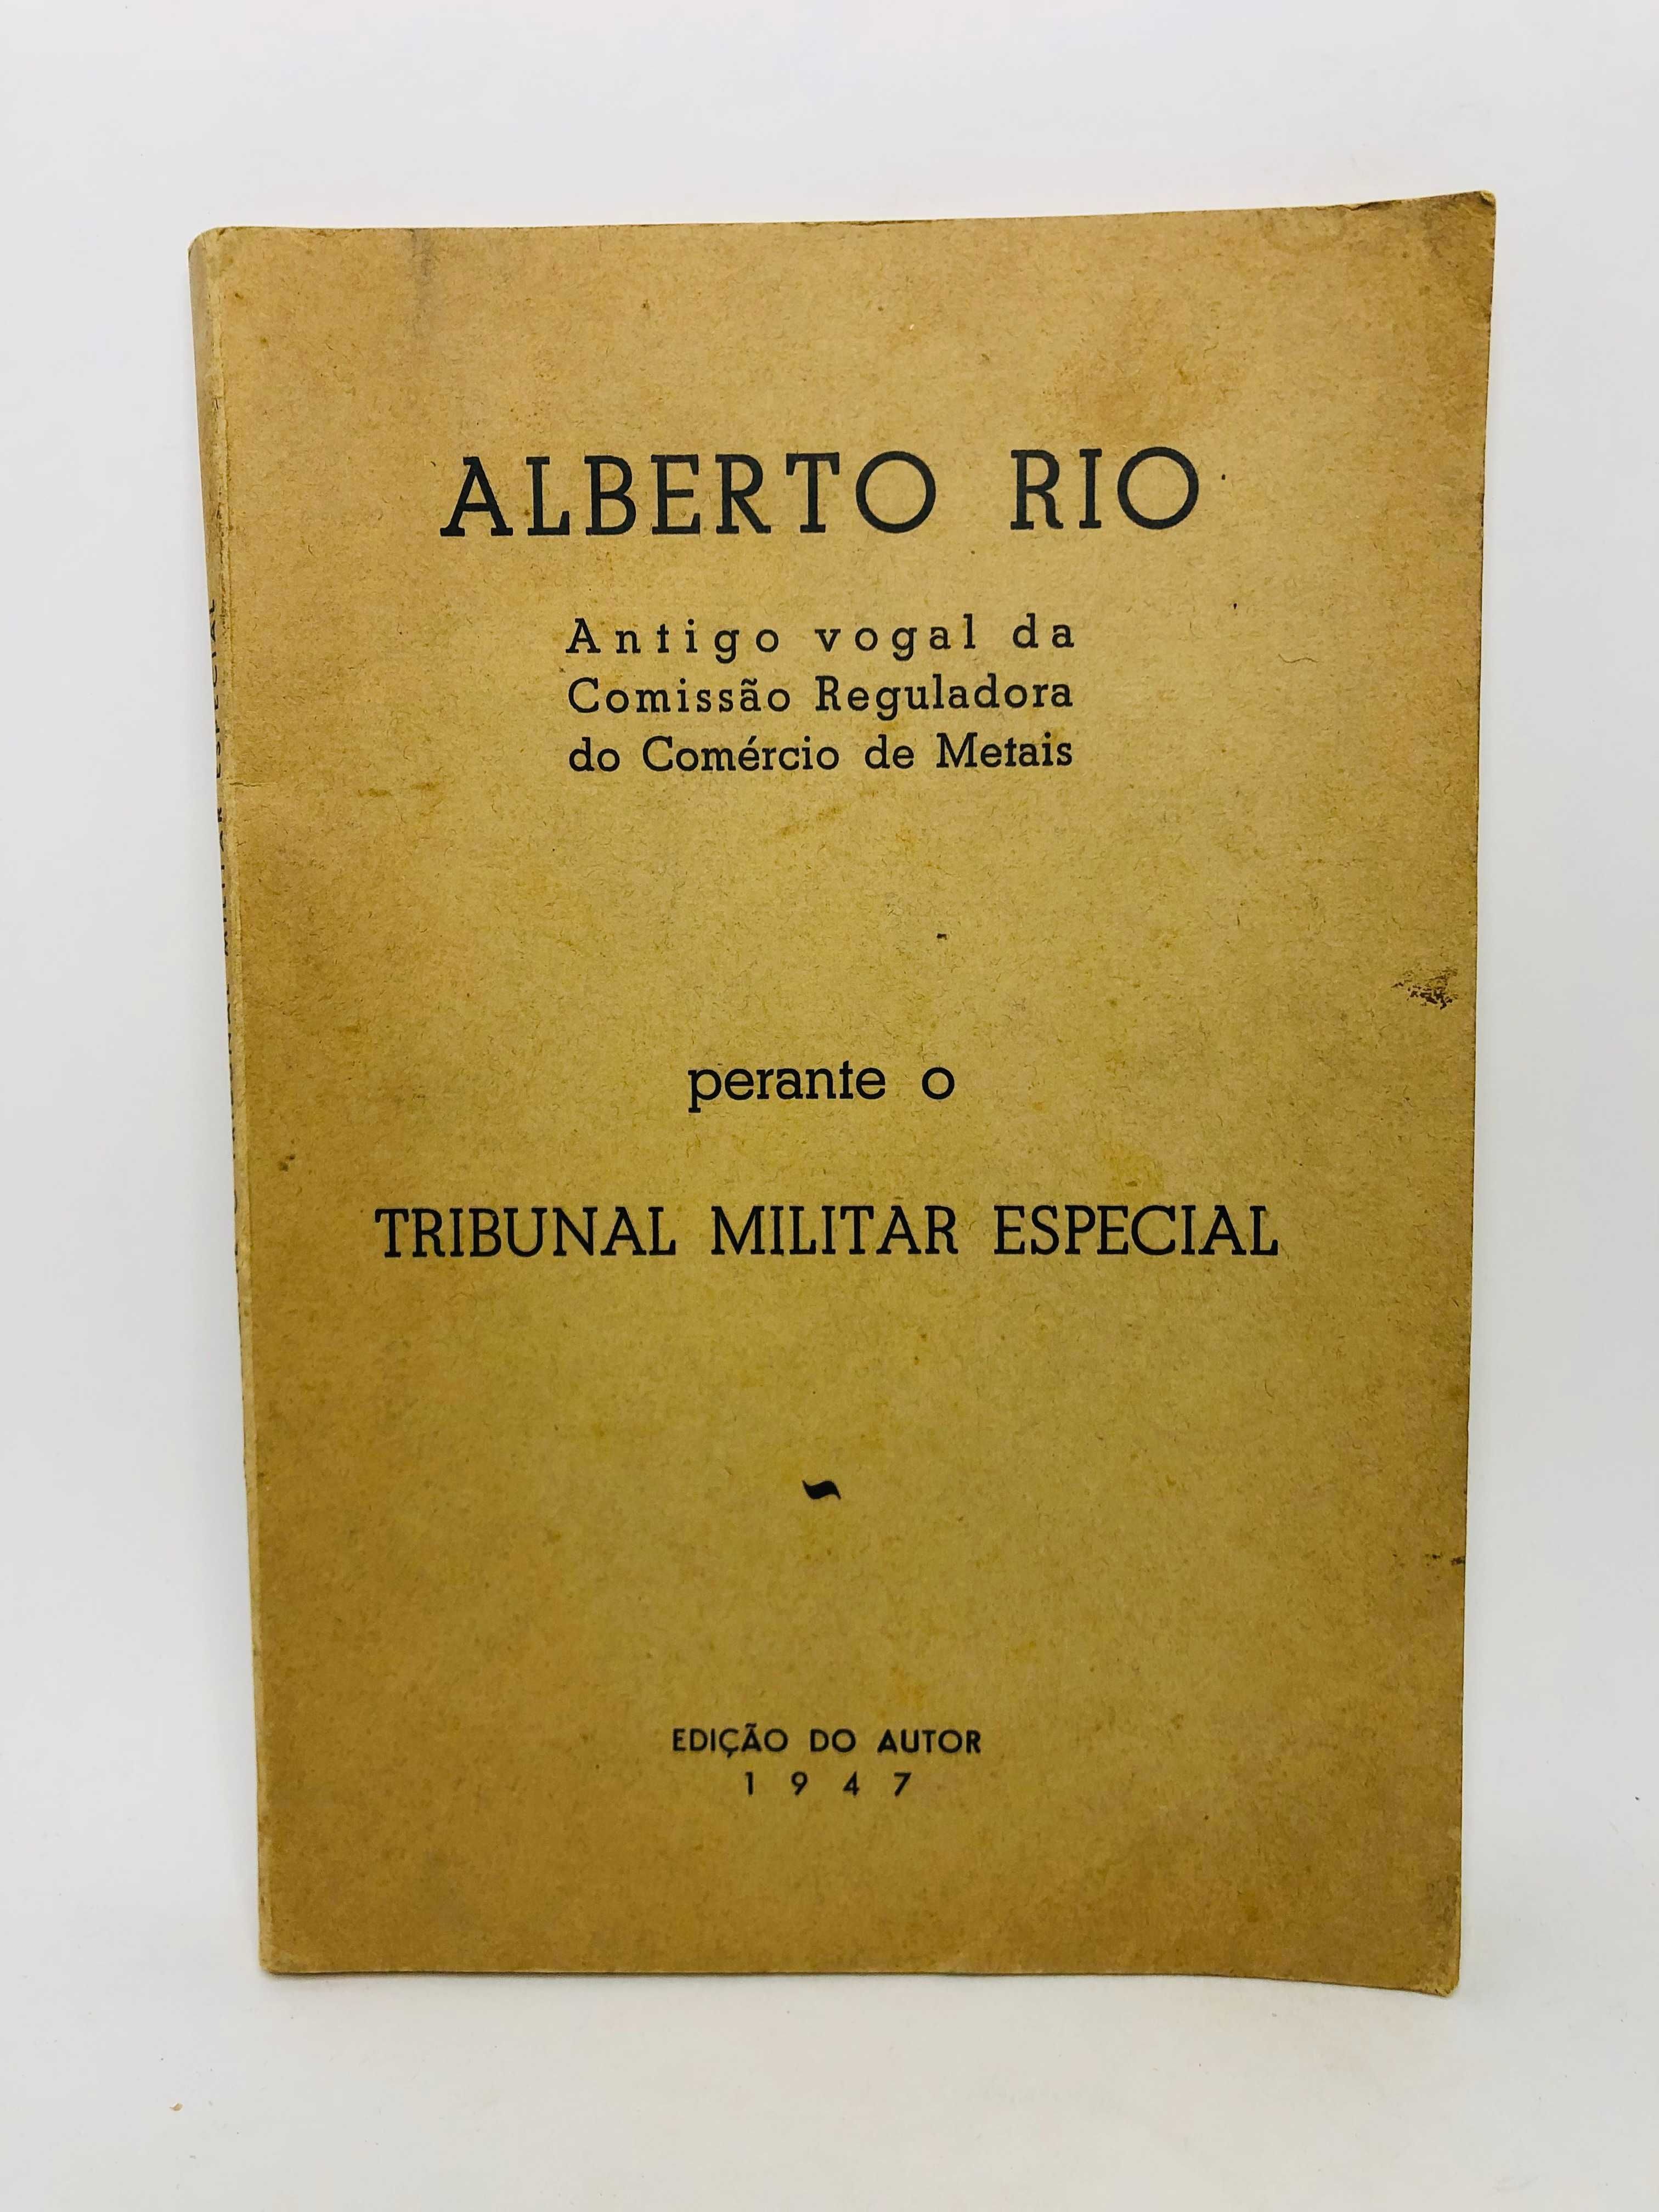 Alberto Rio perante o Tribunal Militar Especial